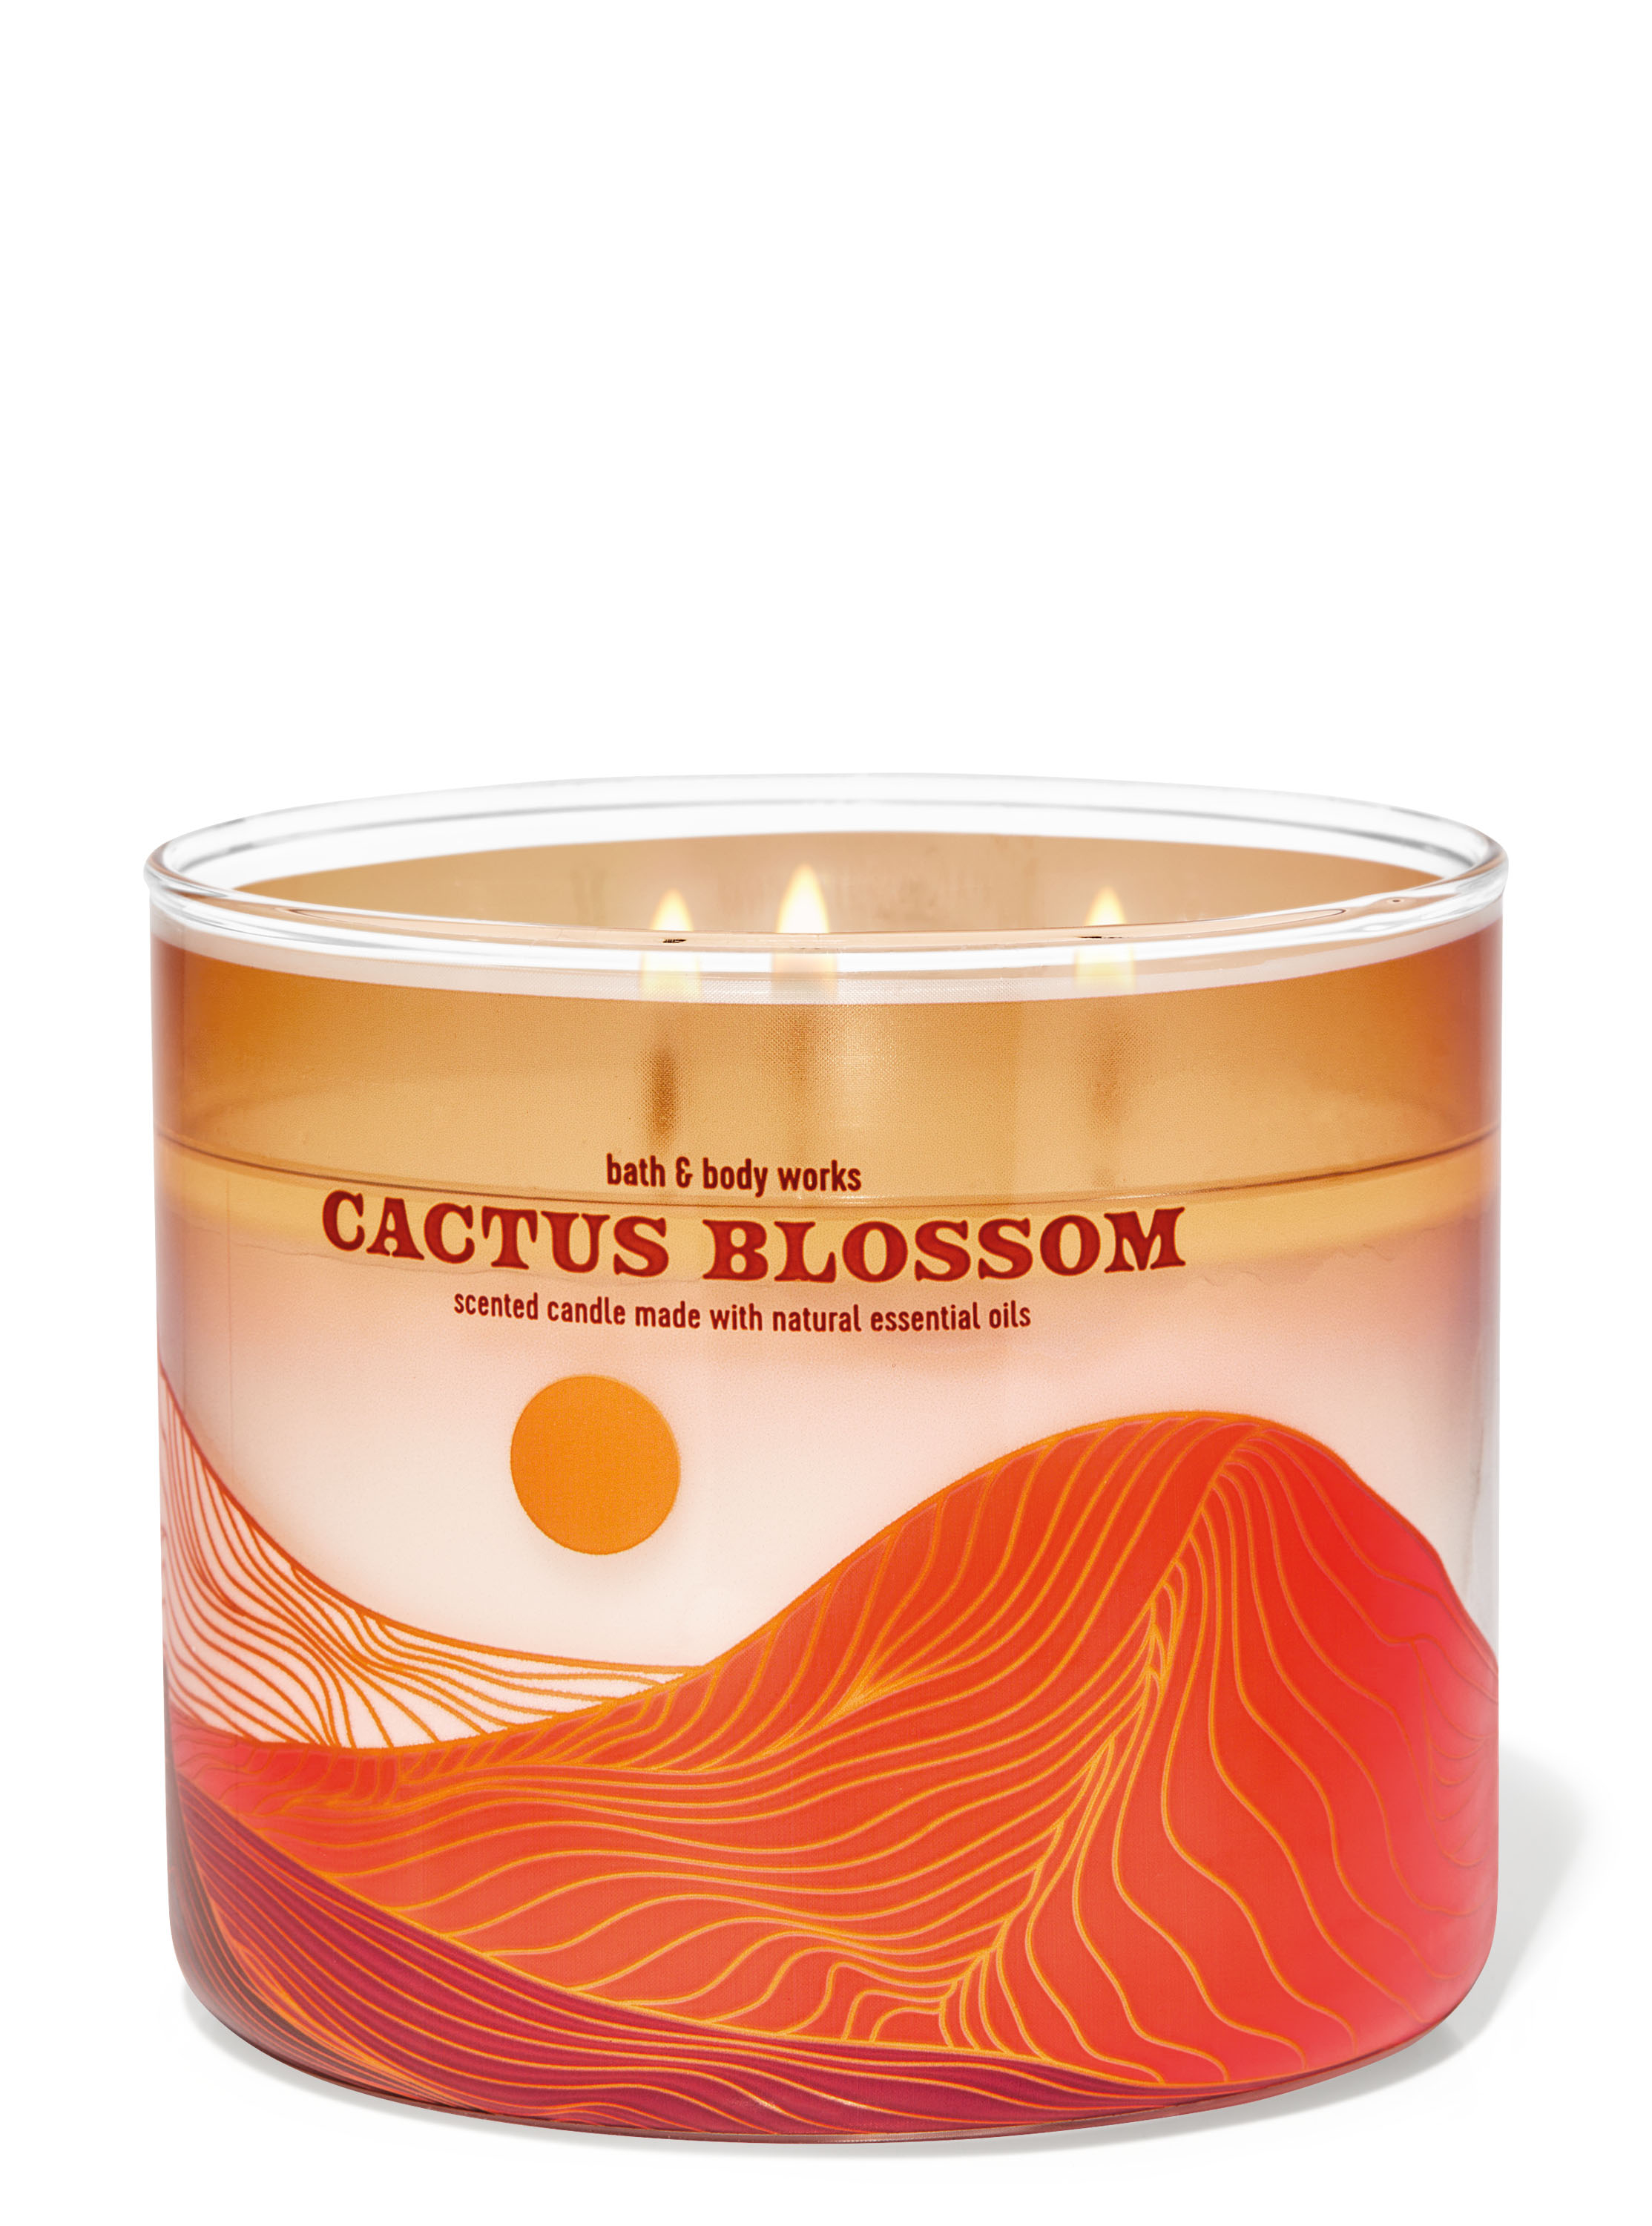 Bath & Body Works White Barn Cactus Blossom Triple Wick Jar Candle 14.5oz -   Denmark